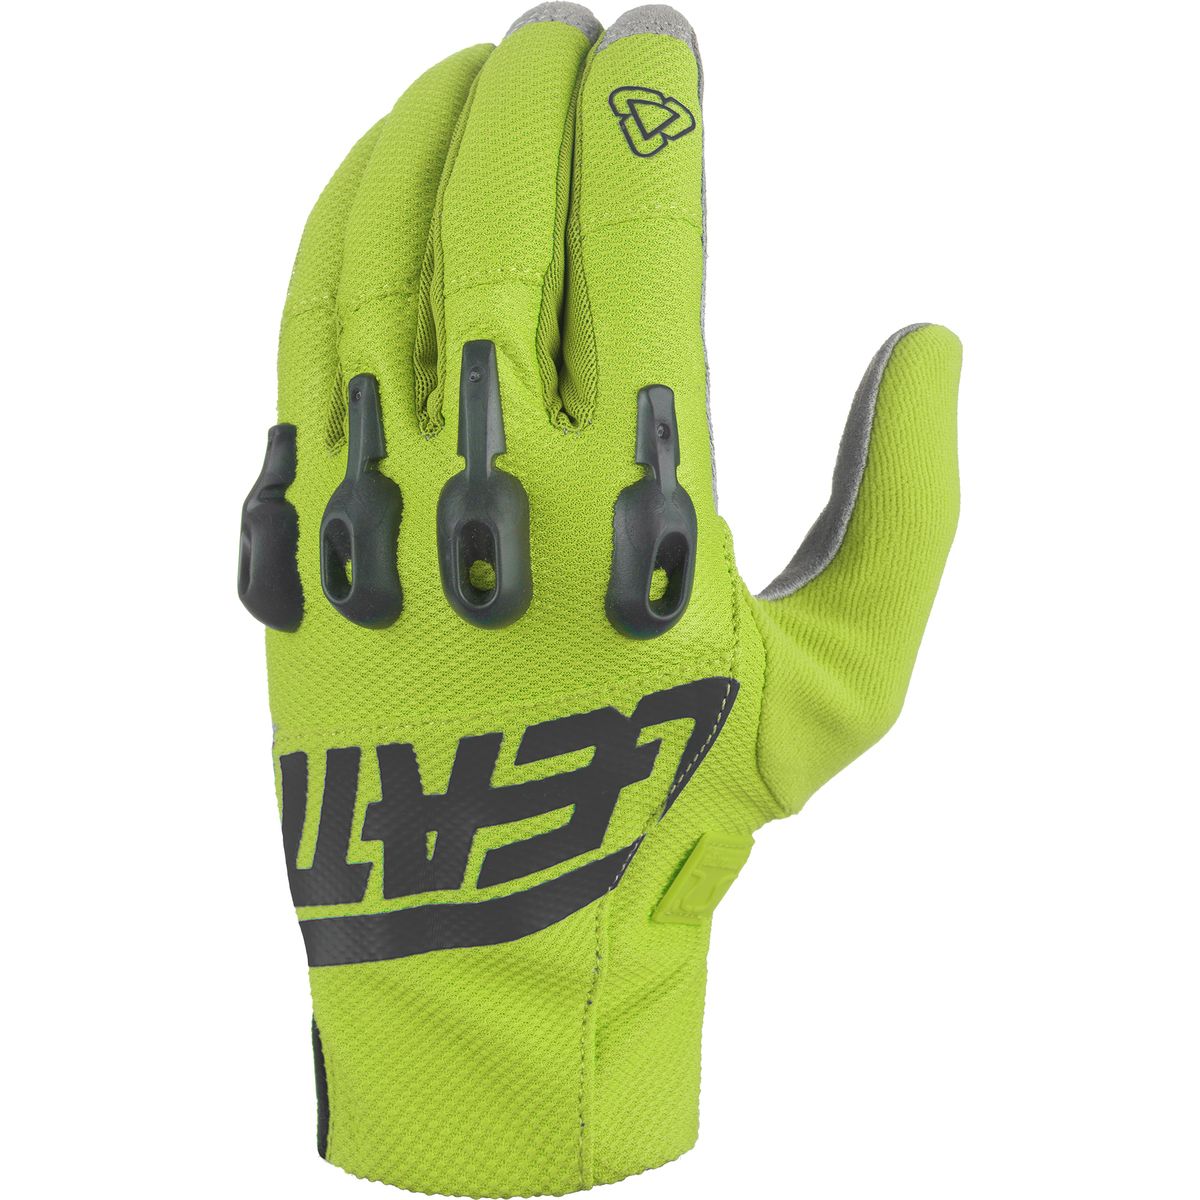 Leatt DBX 3.0 Lite Glove Men's